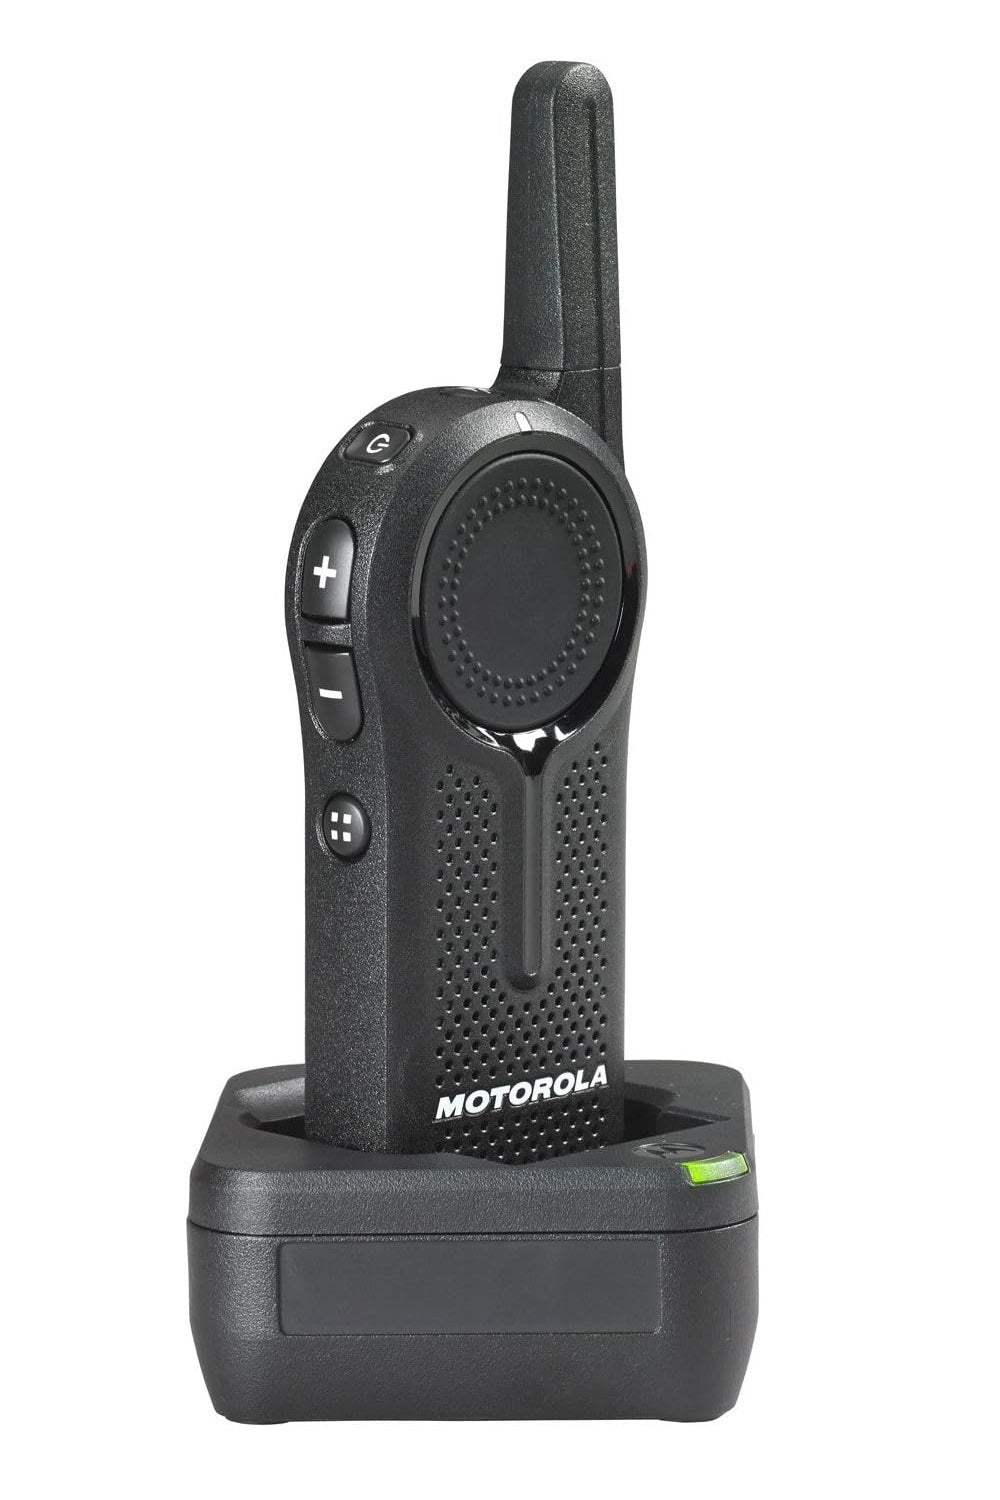 Motorola Curve Two-Way Radio for Business